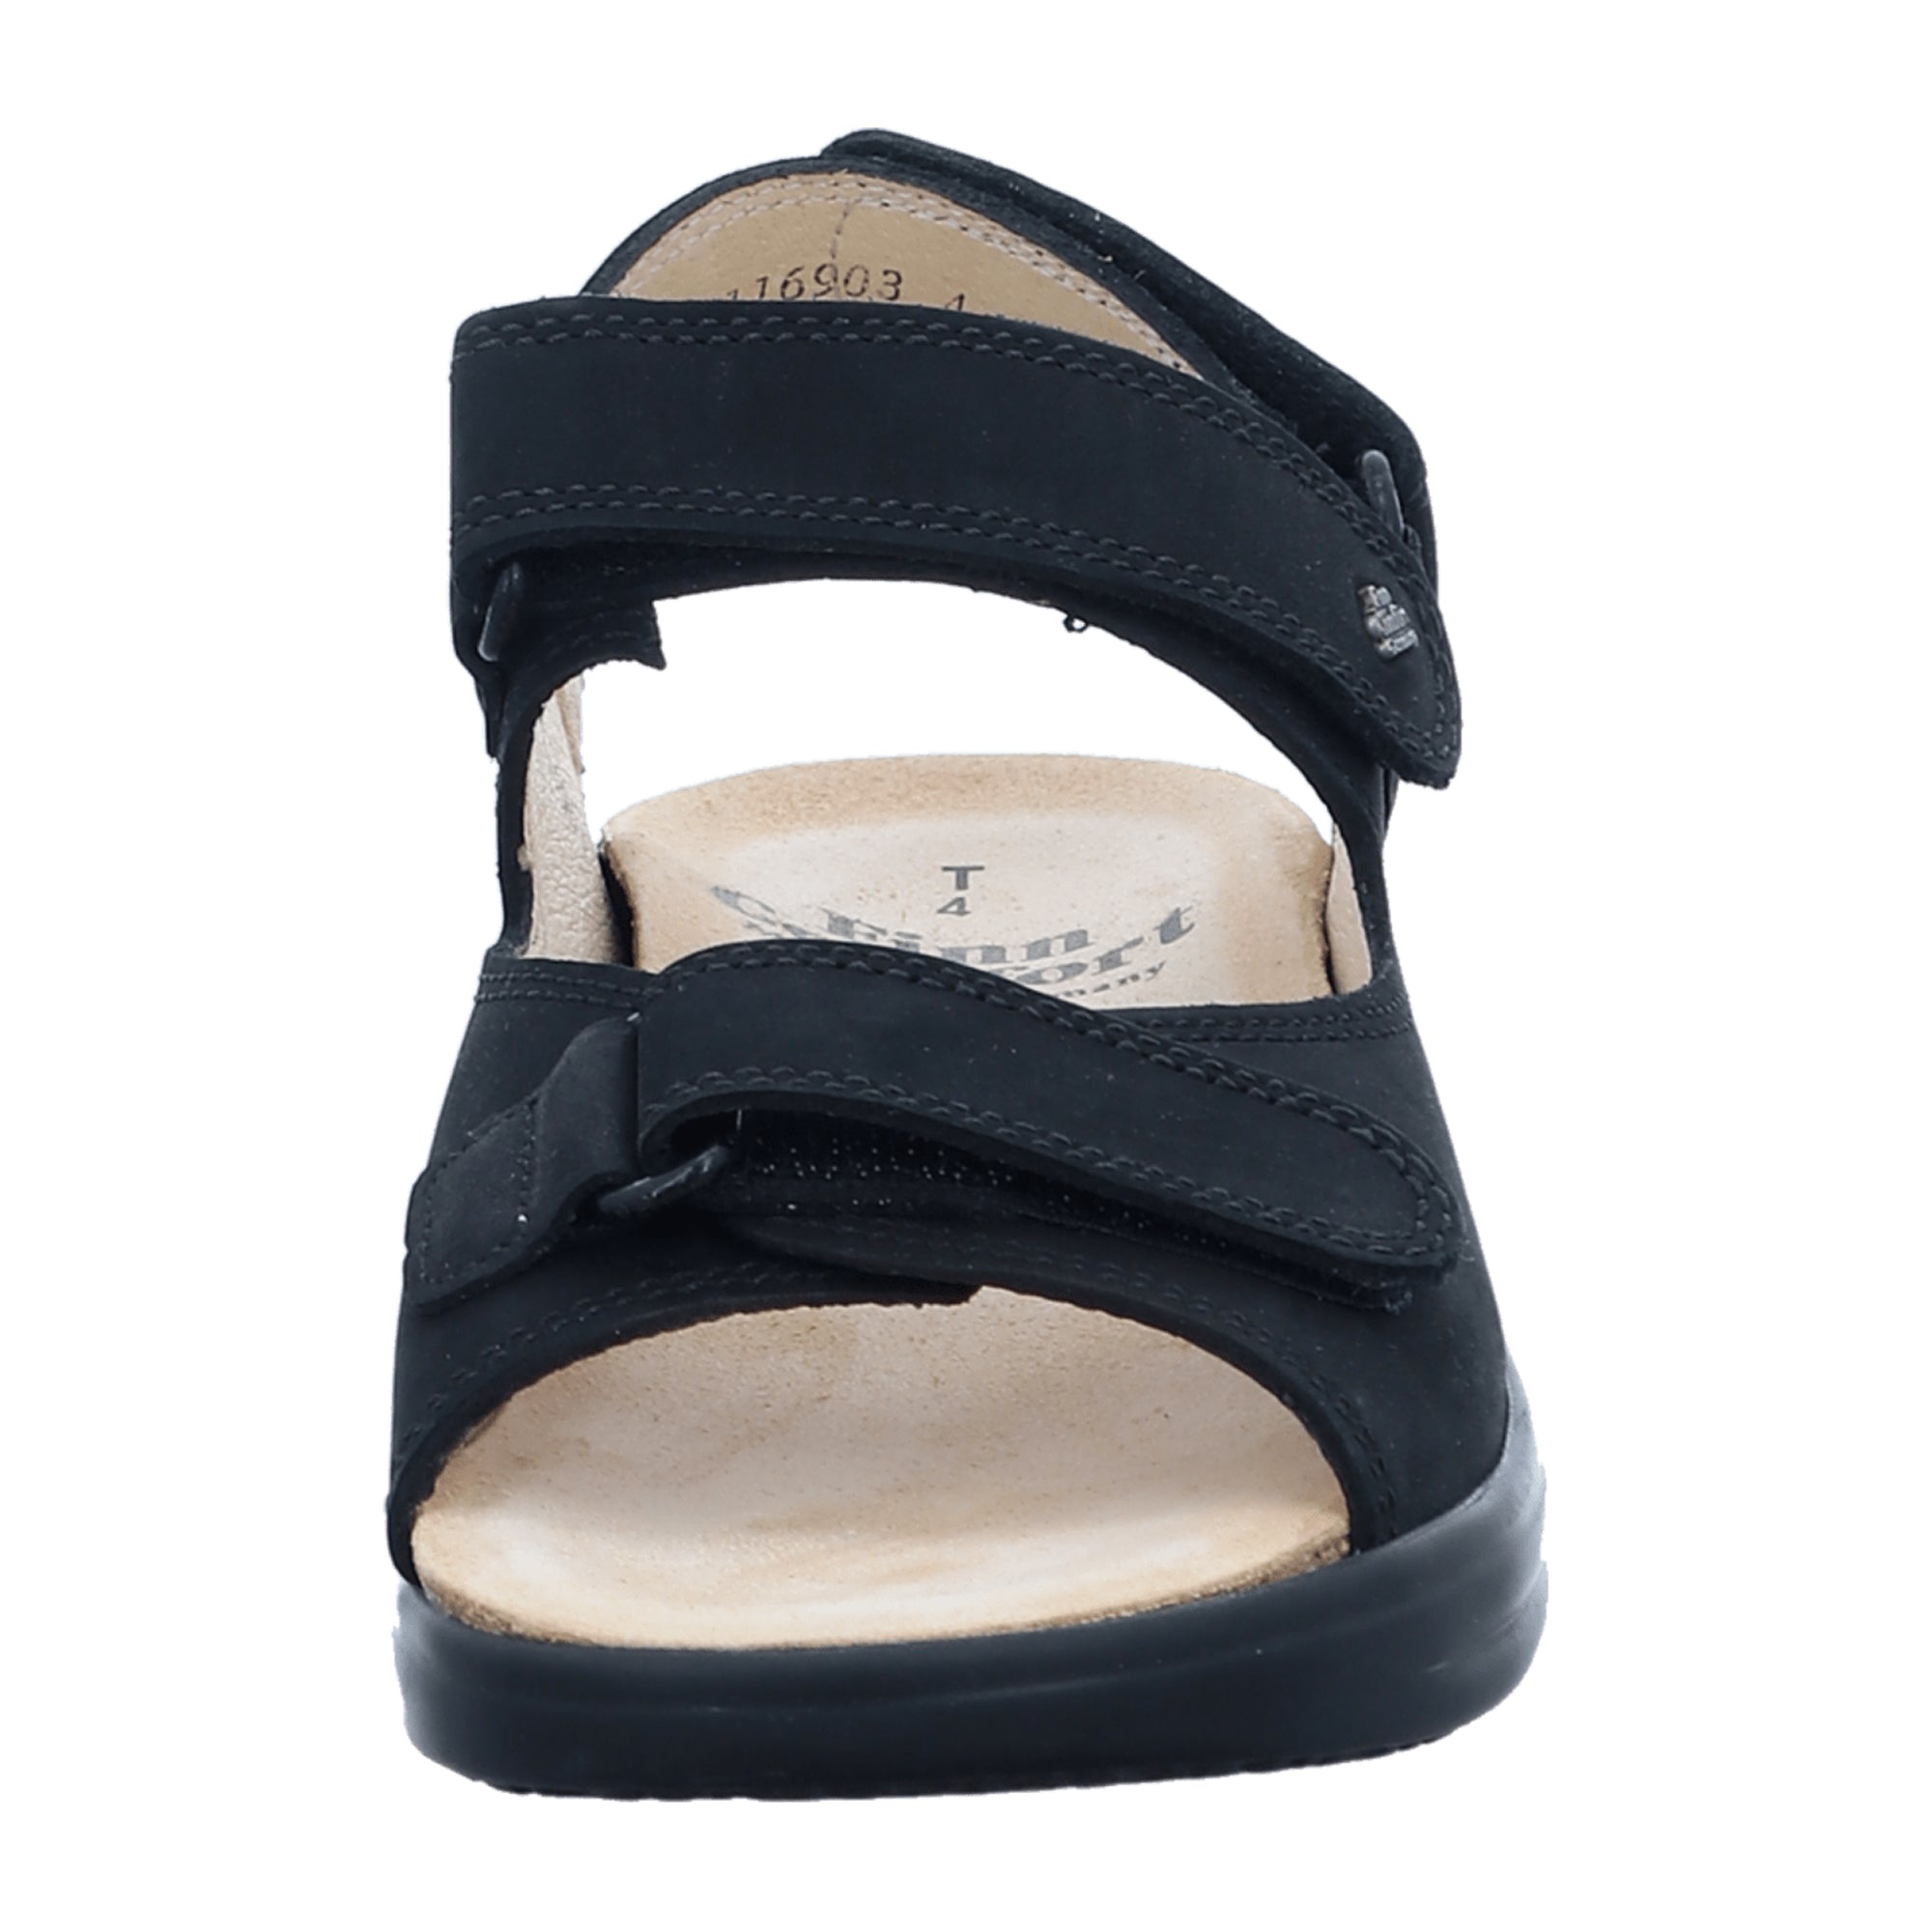 Finn Comfort Corinth Women's Comfort Sandals - Elegant Black Leather